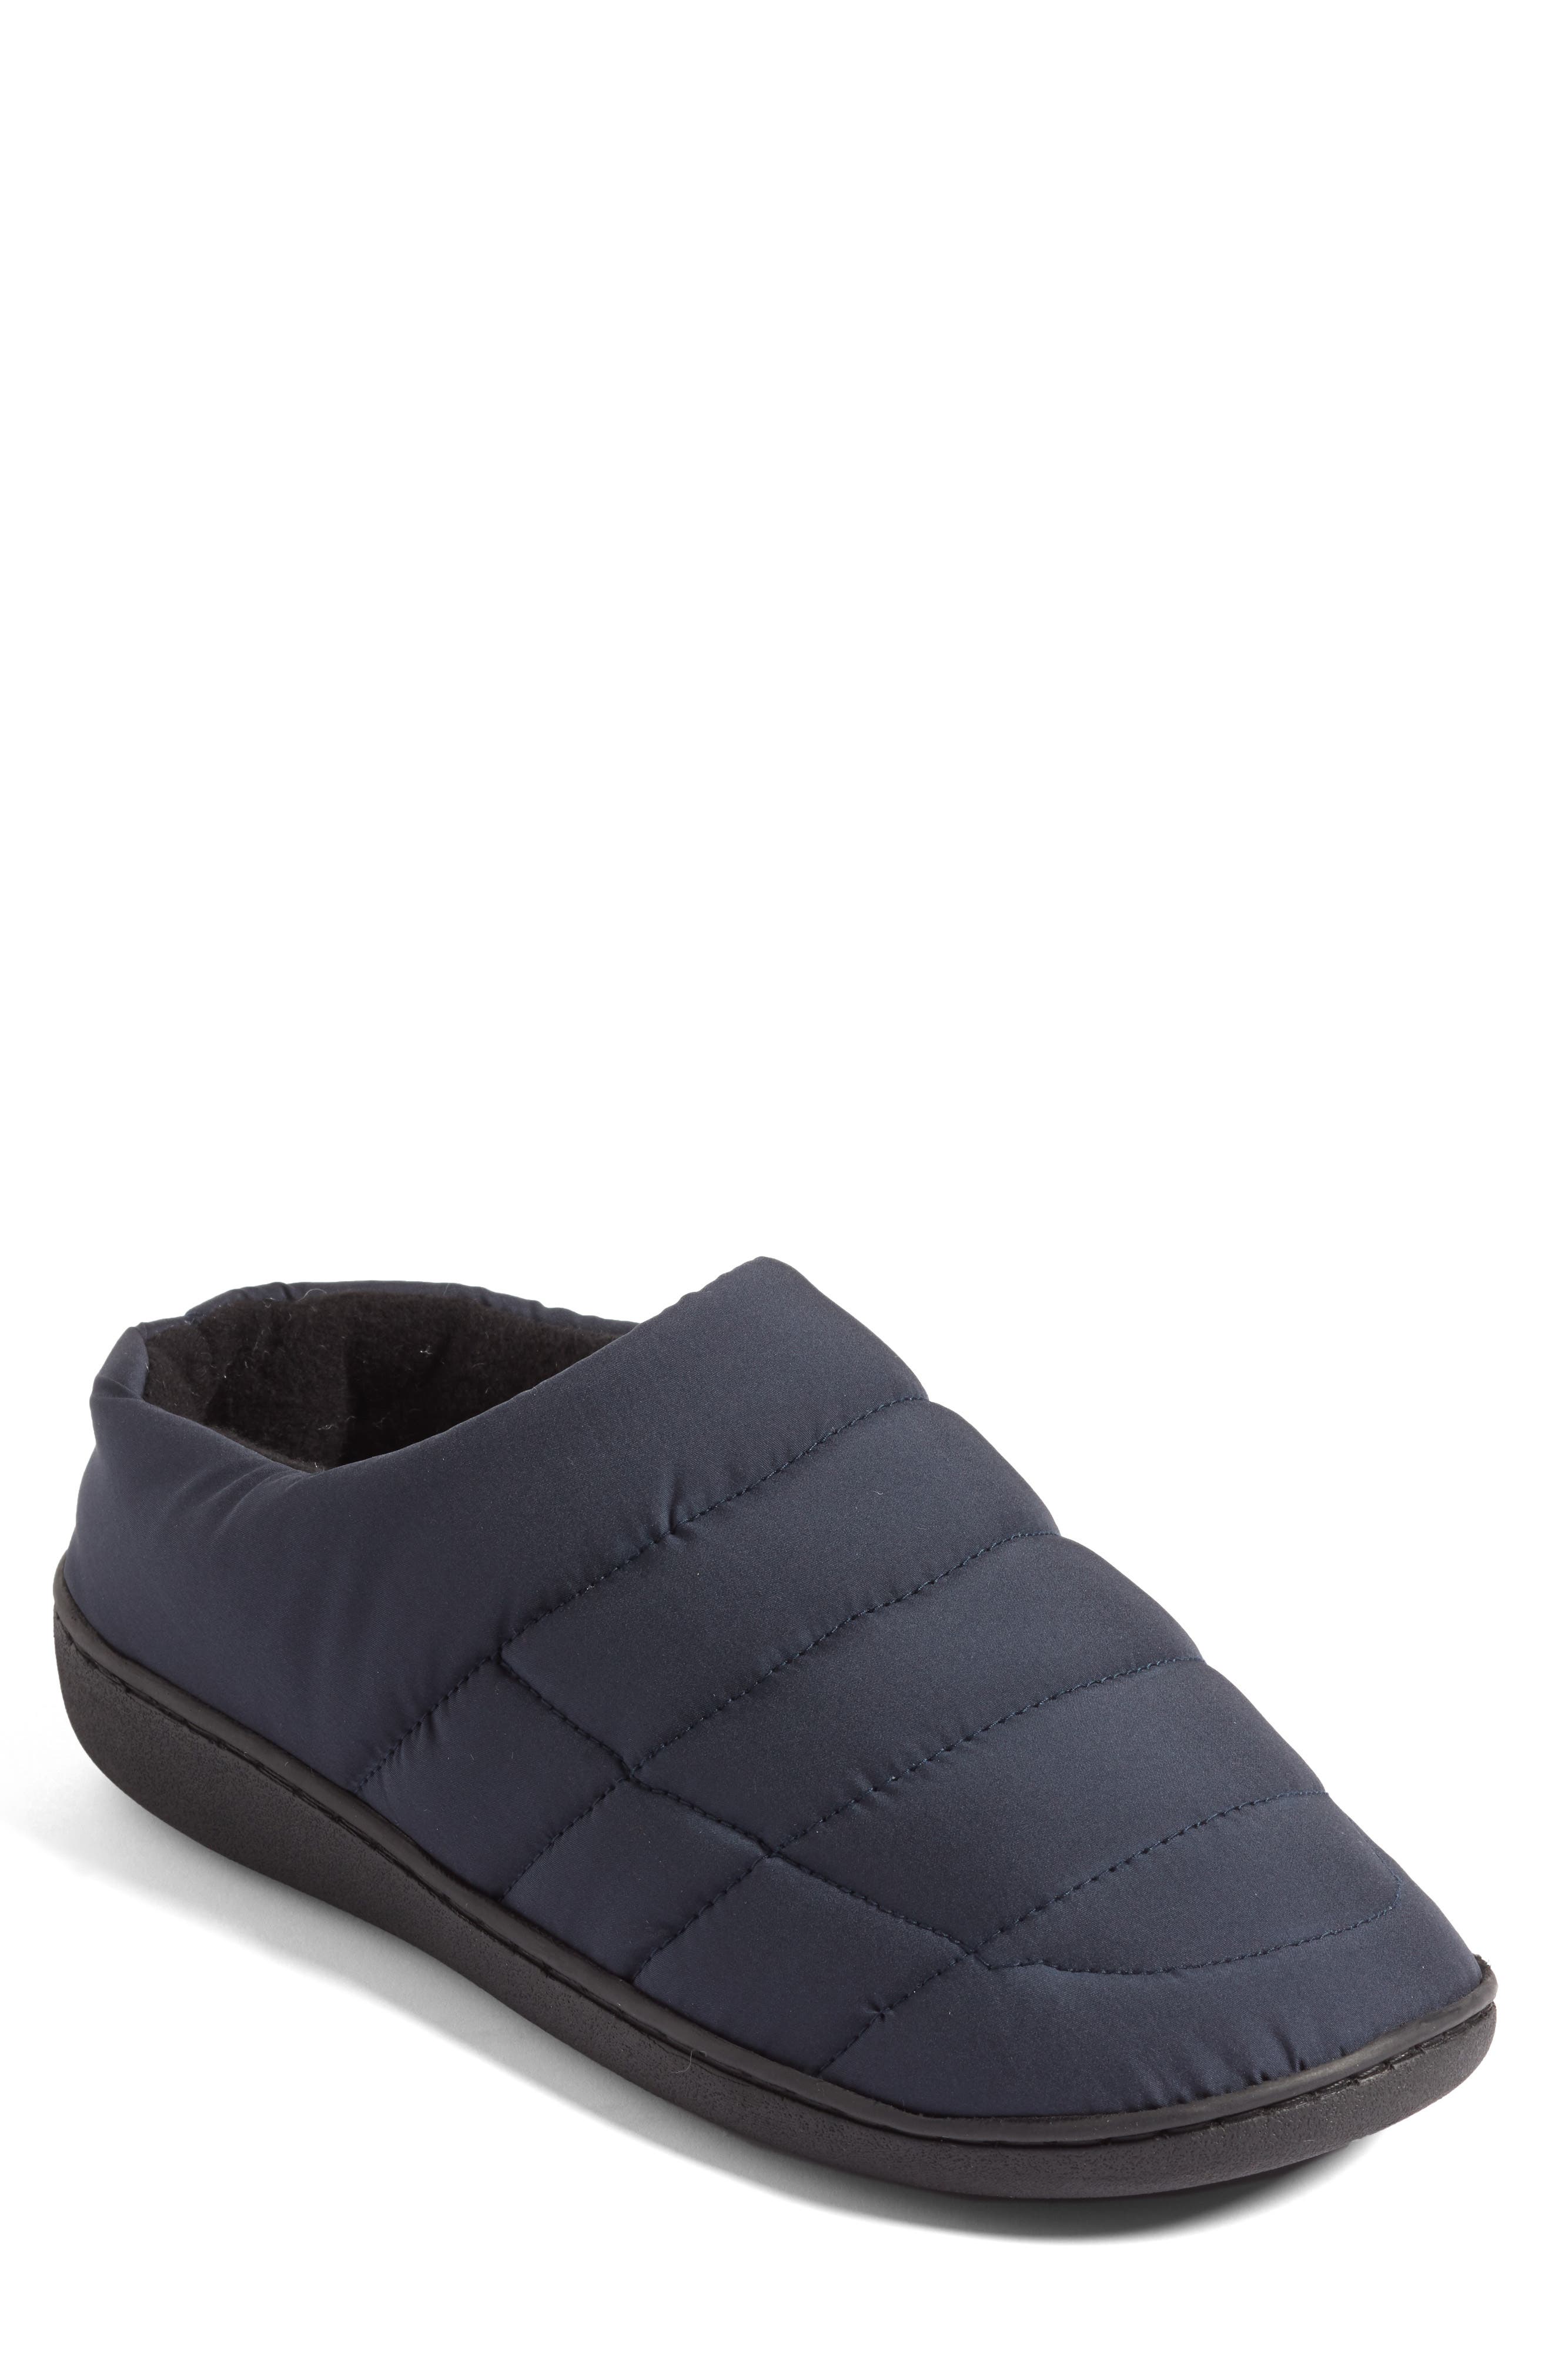 nordstrom men's slippers on sale